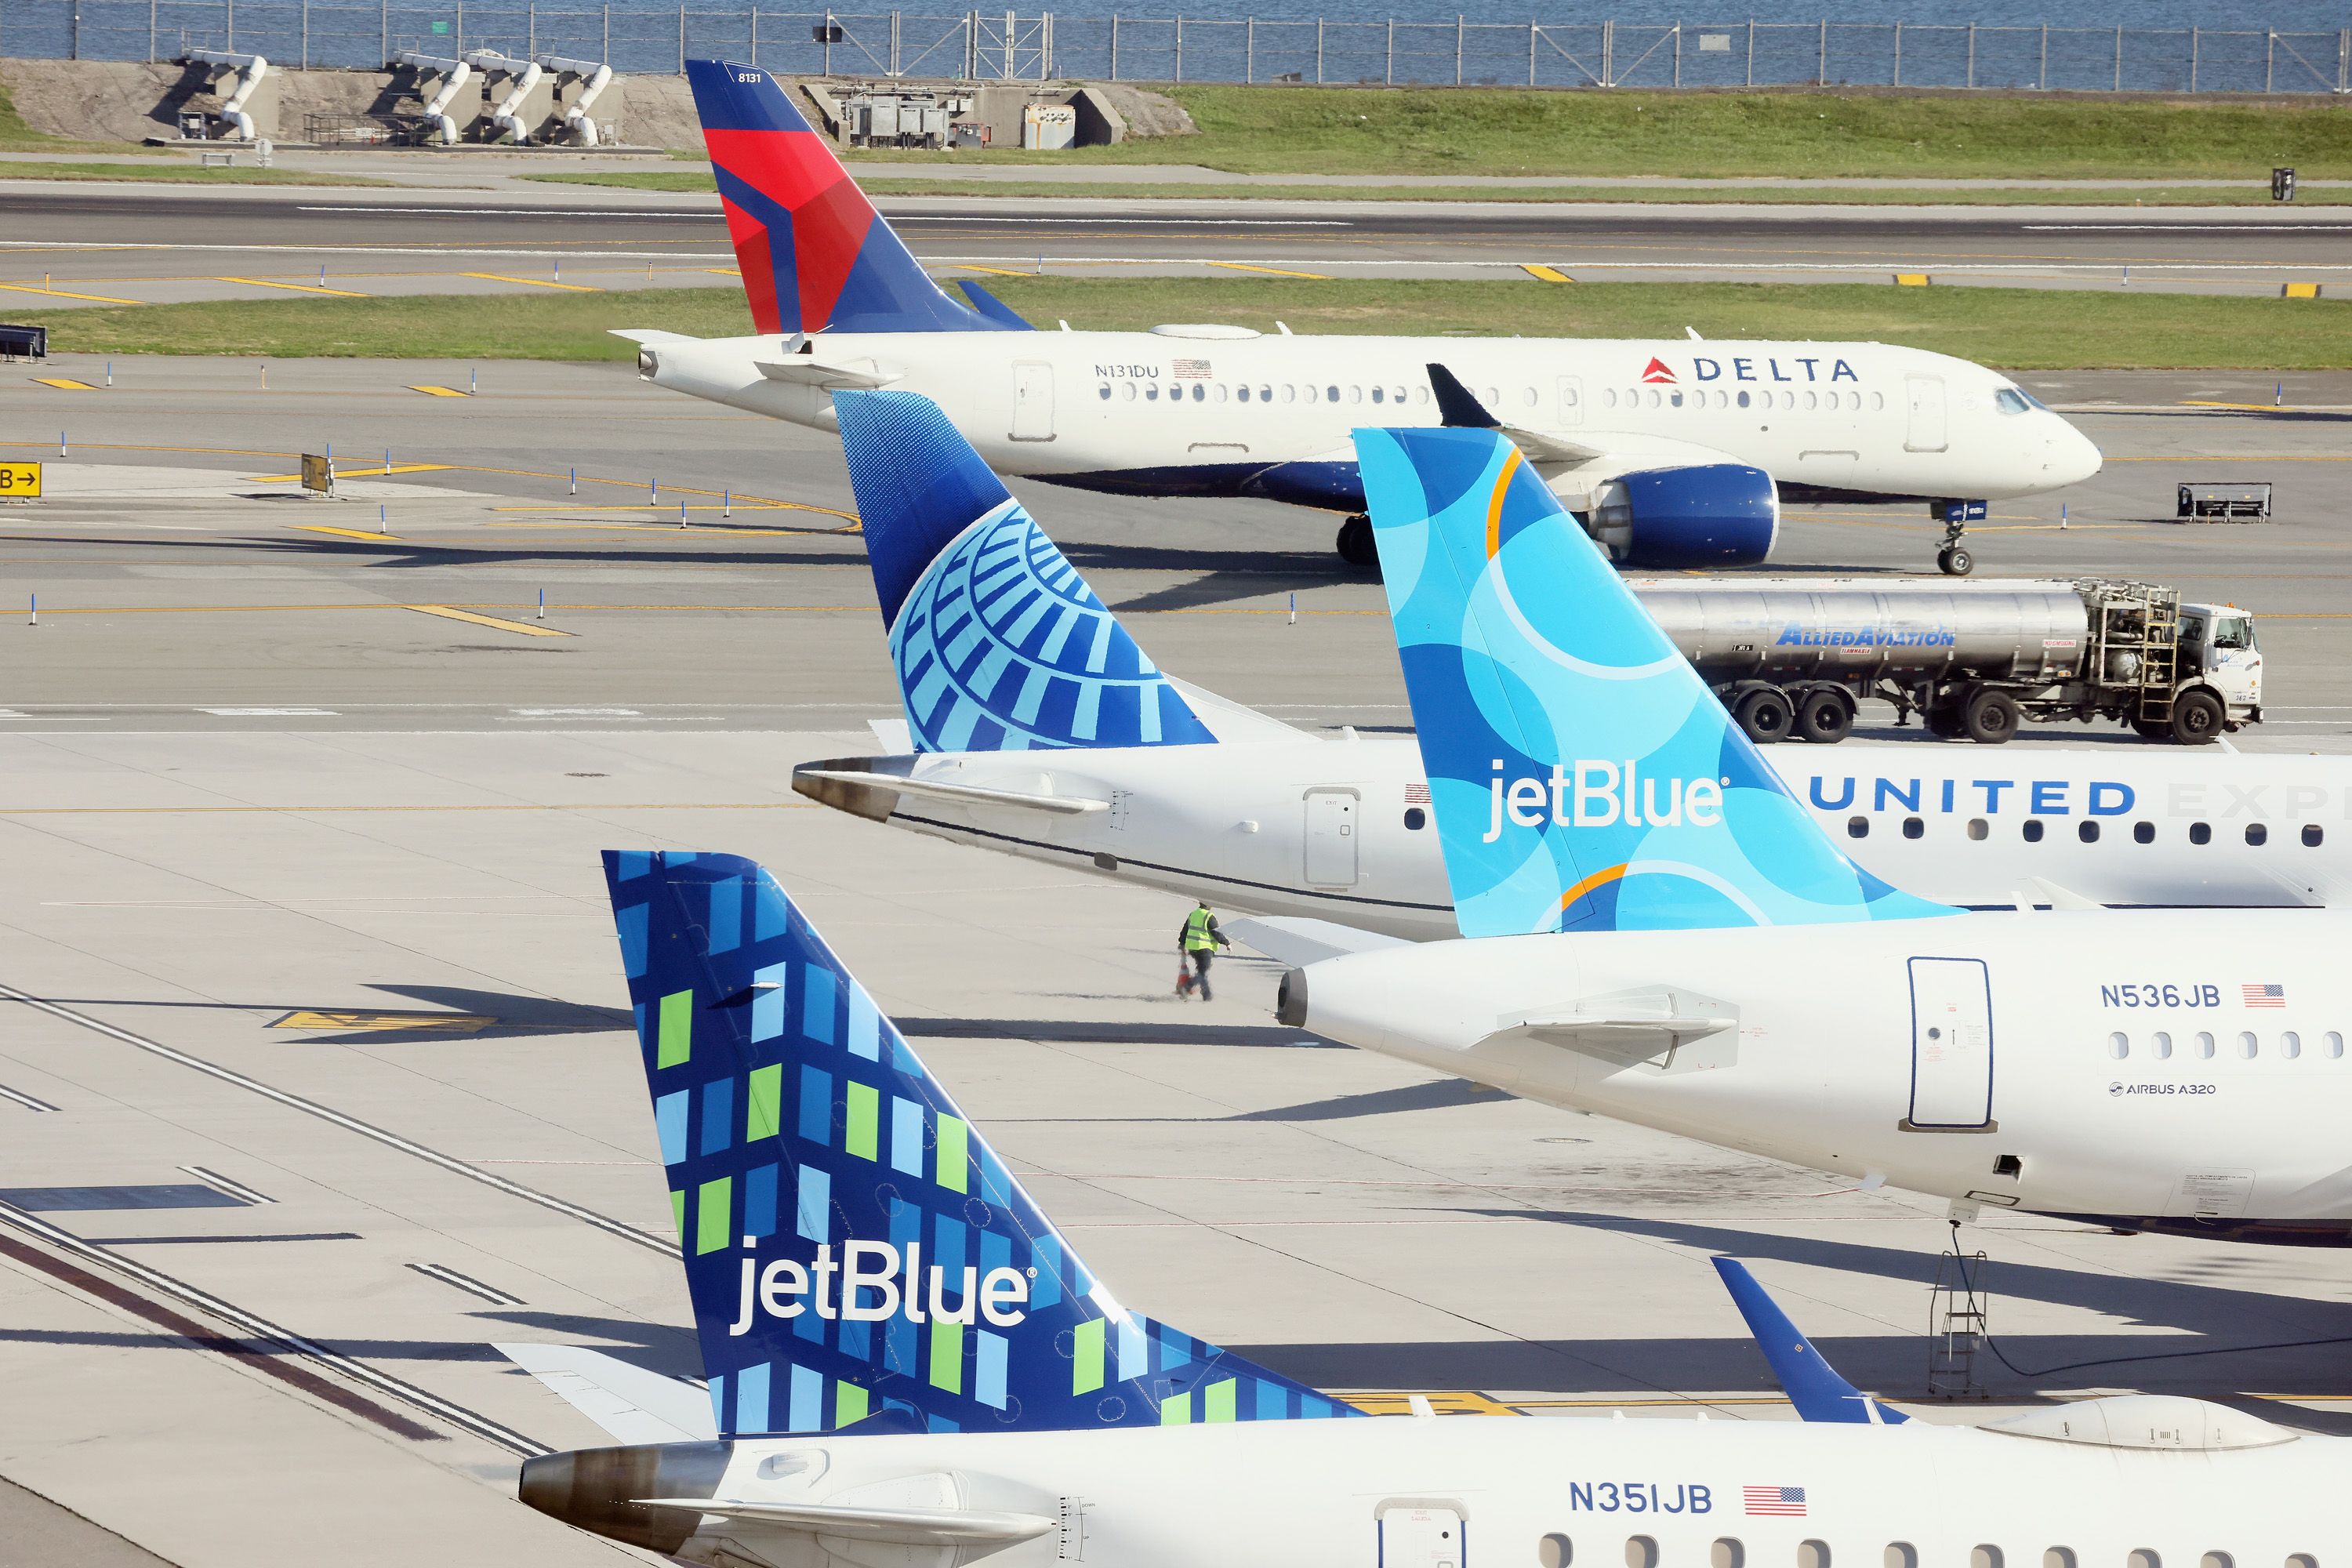 Delta United JetBlue Tails